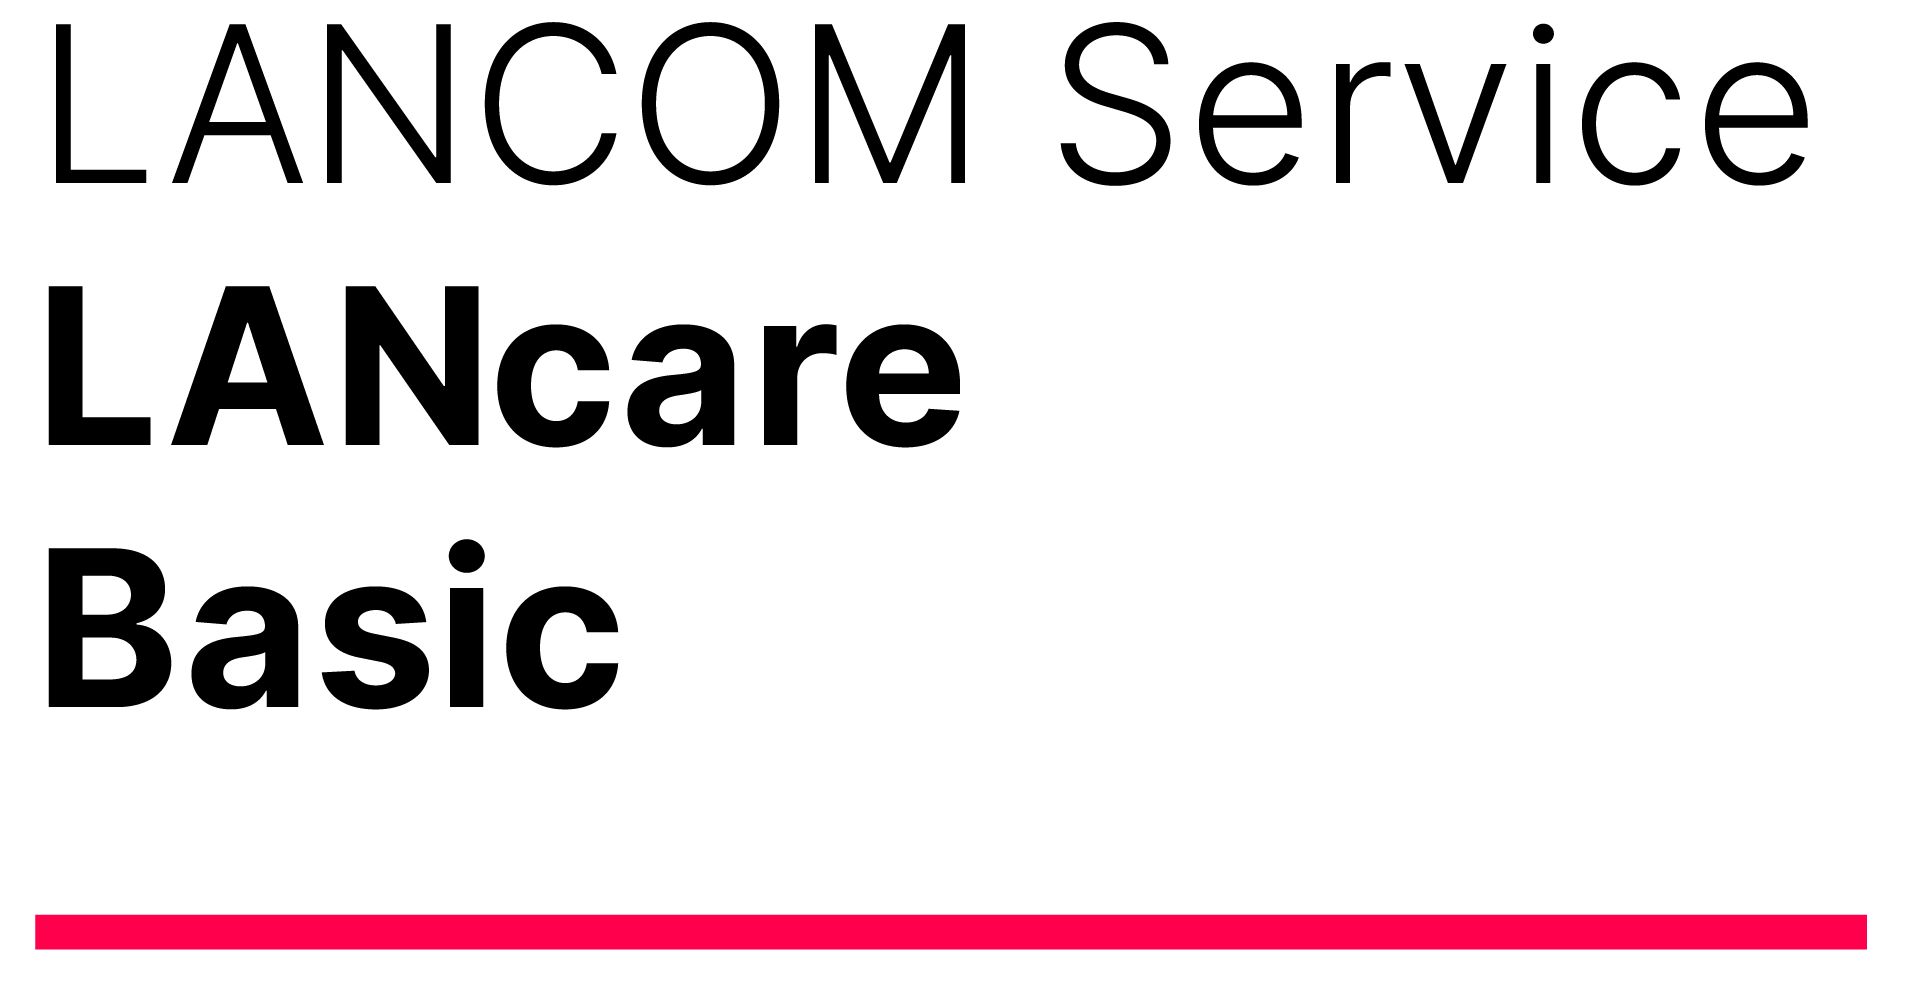 Lancom Service LANcare Basic M (ESD) +++ ESD, https://www.lancom-systems.de/registrierung_1